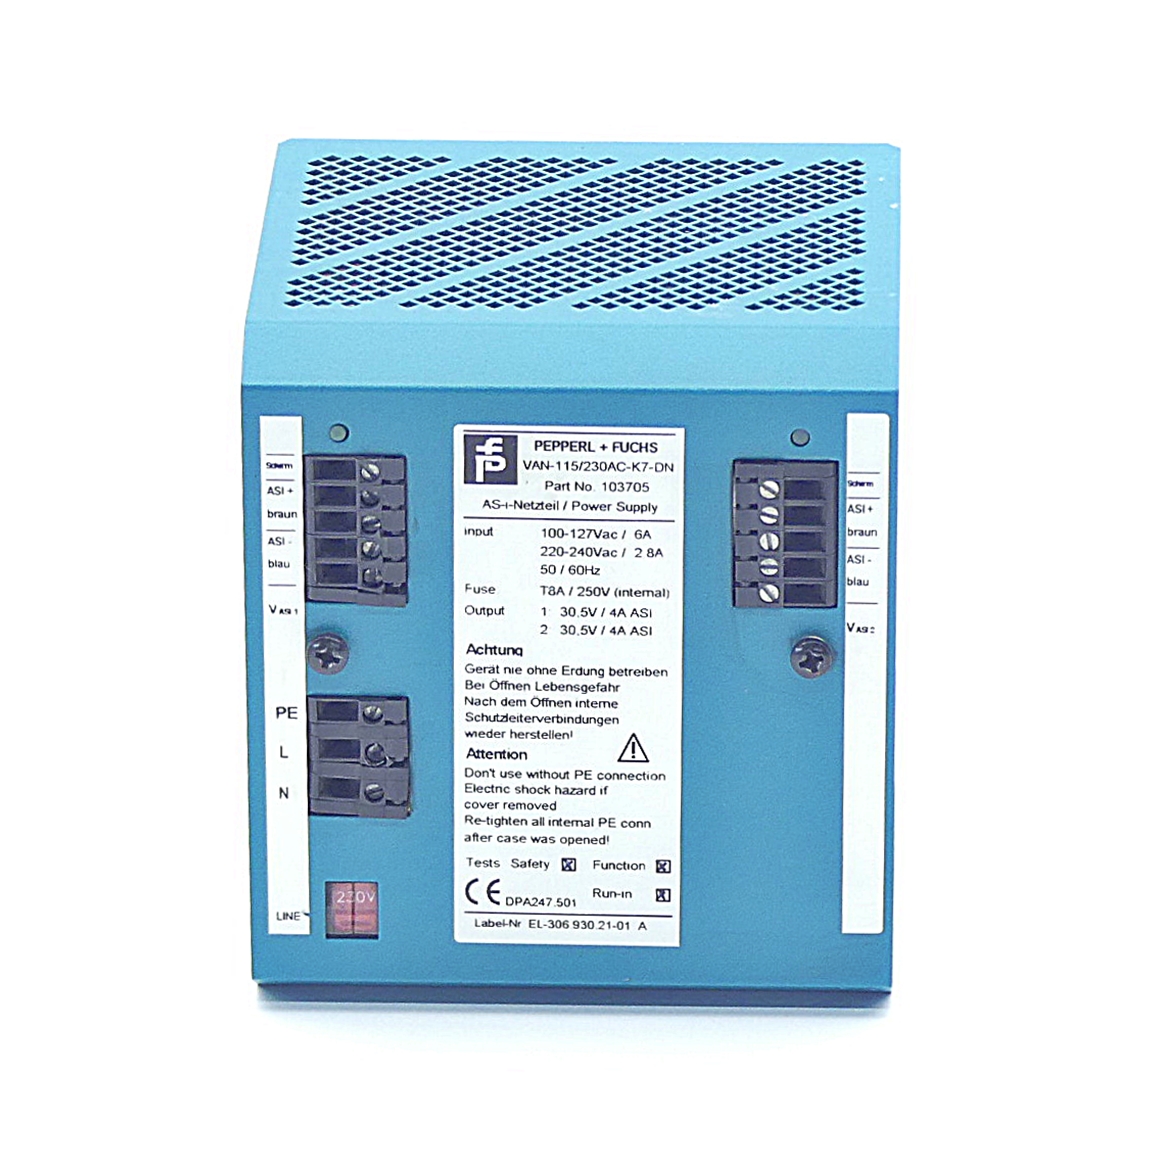 AS-Interface power supply VAN-115/230AC-K7-DN 